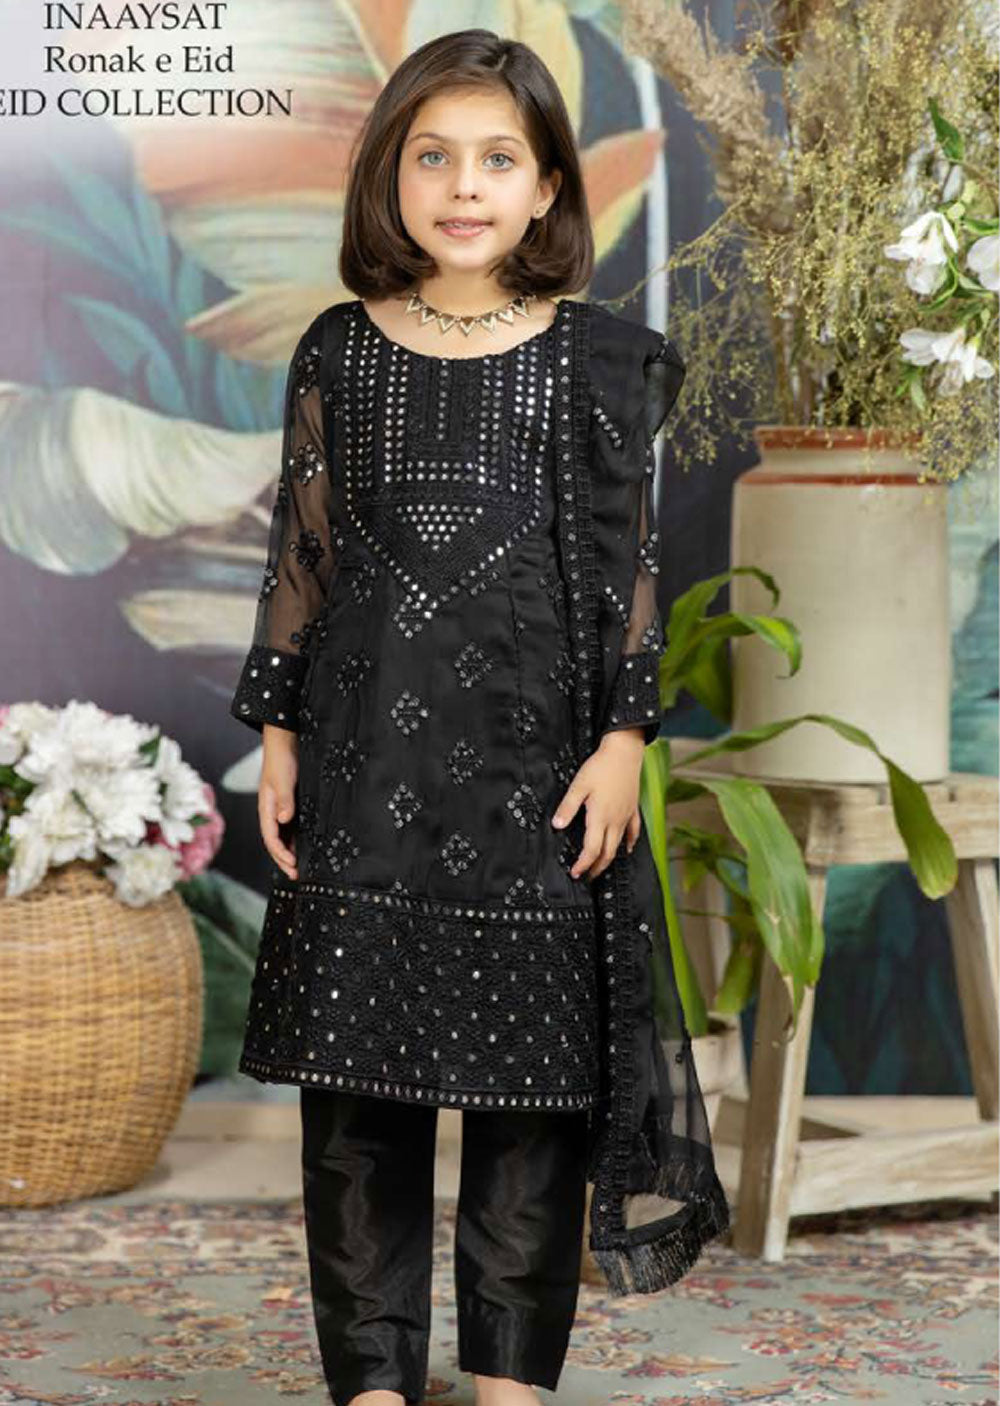 RDA-03 Readymade Ronak E Eid Mother & Daughter Suit - Memsaab Online